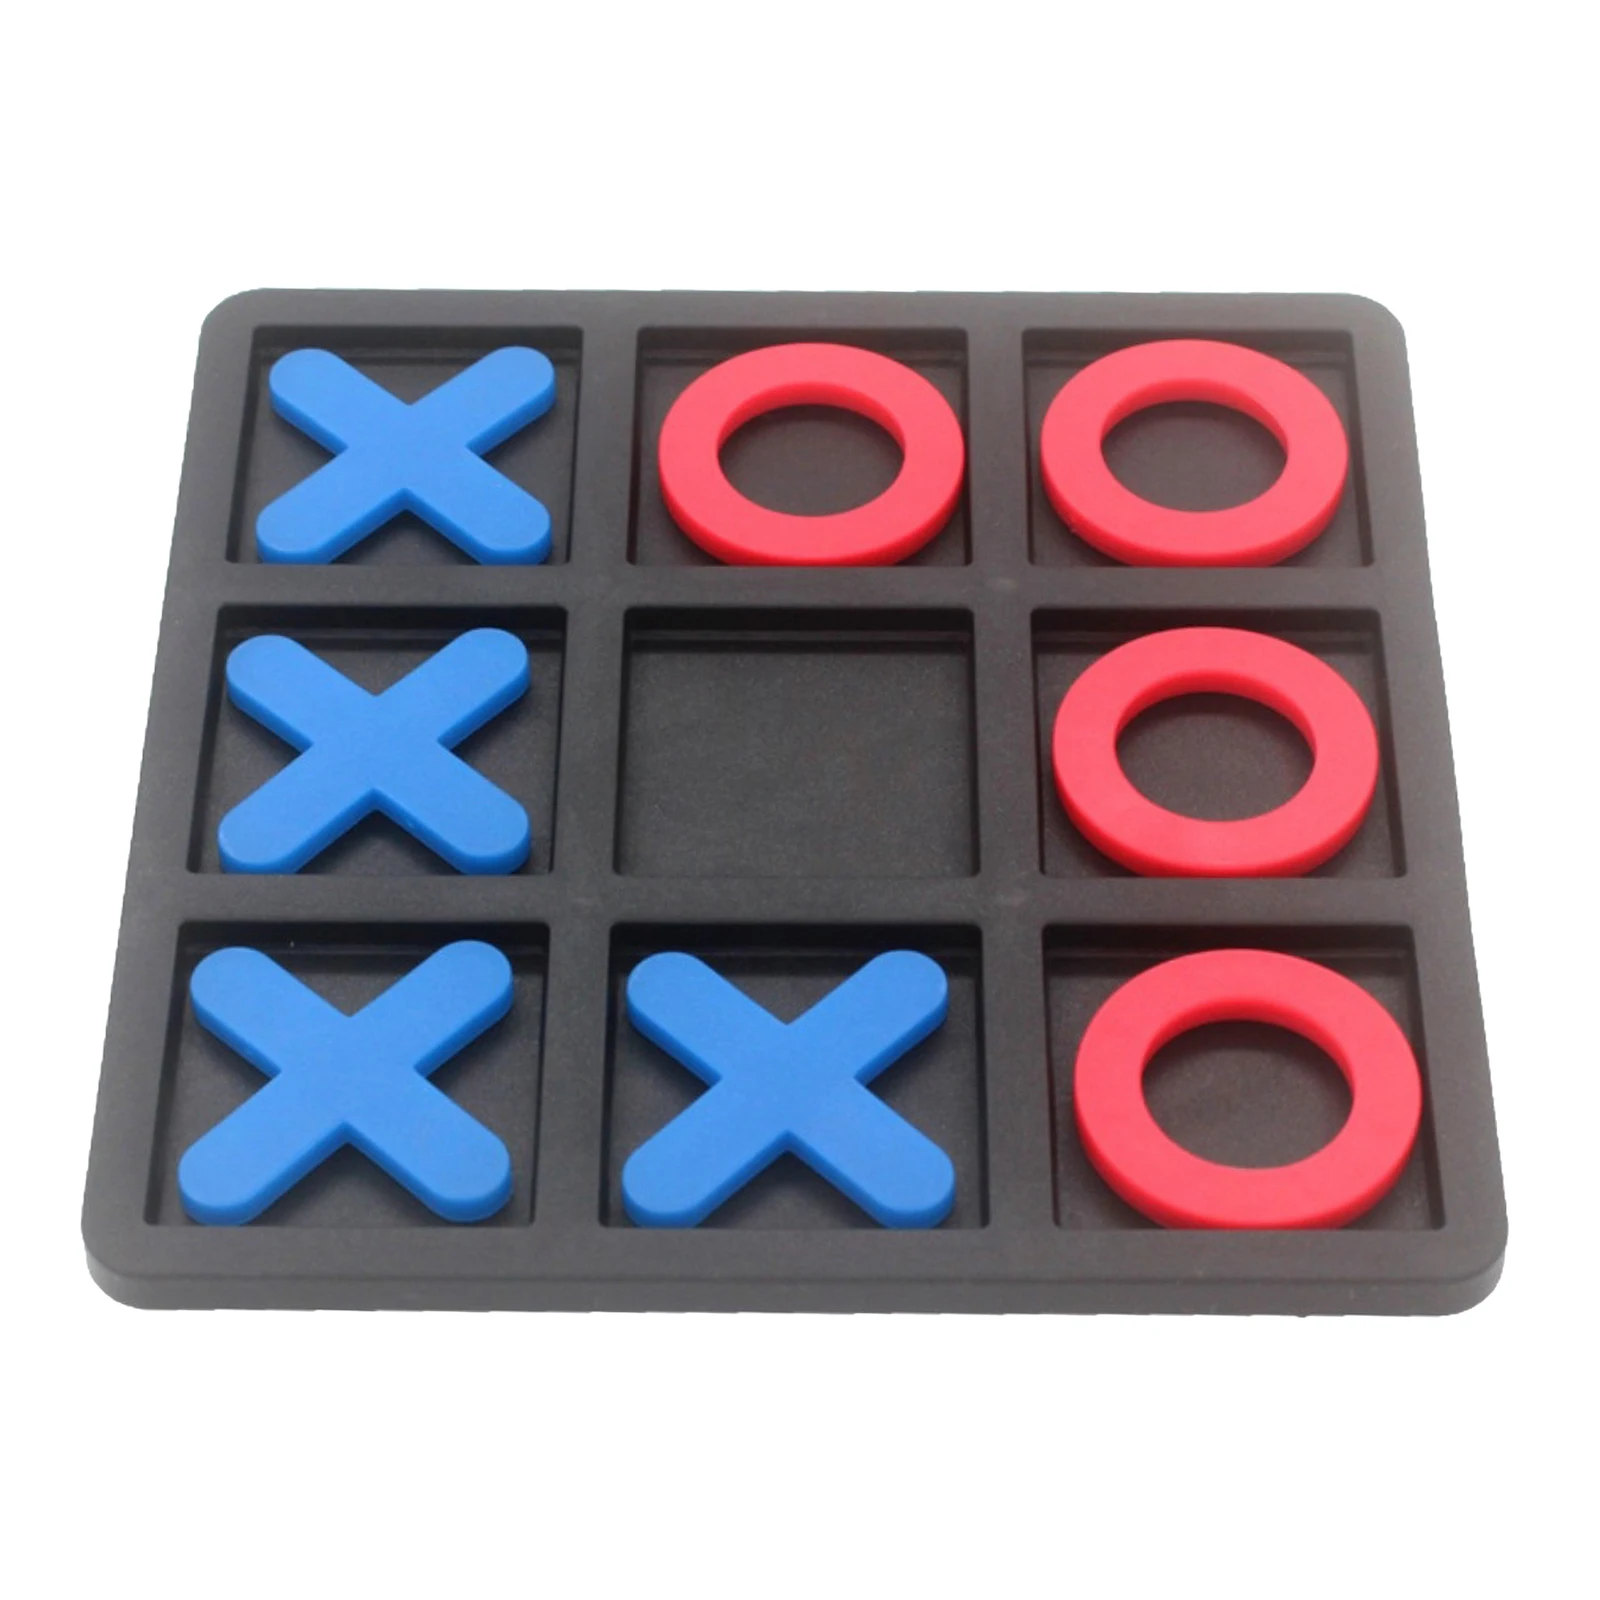 Wooden Crosses Tic Tac Toe Board Games for Kids Brain Teaser Tic Tac Toe Gift 